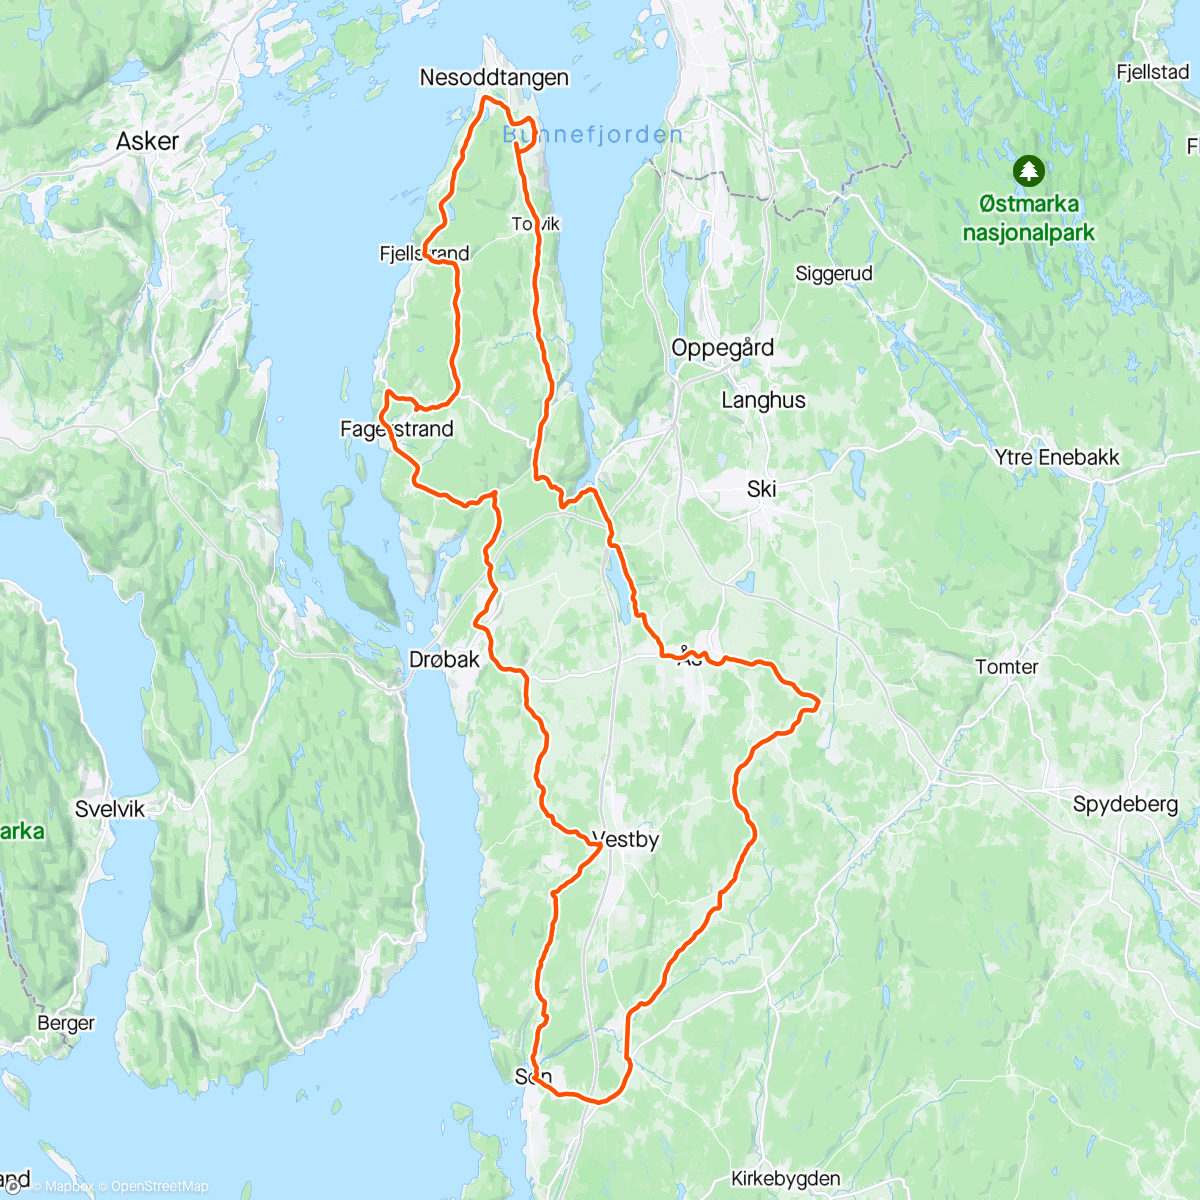 Map of the activity, Nydelig søndagstur